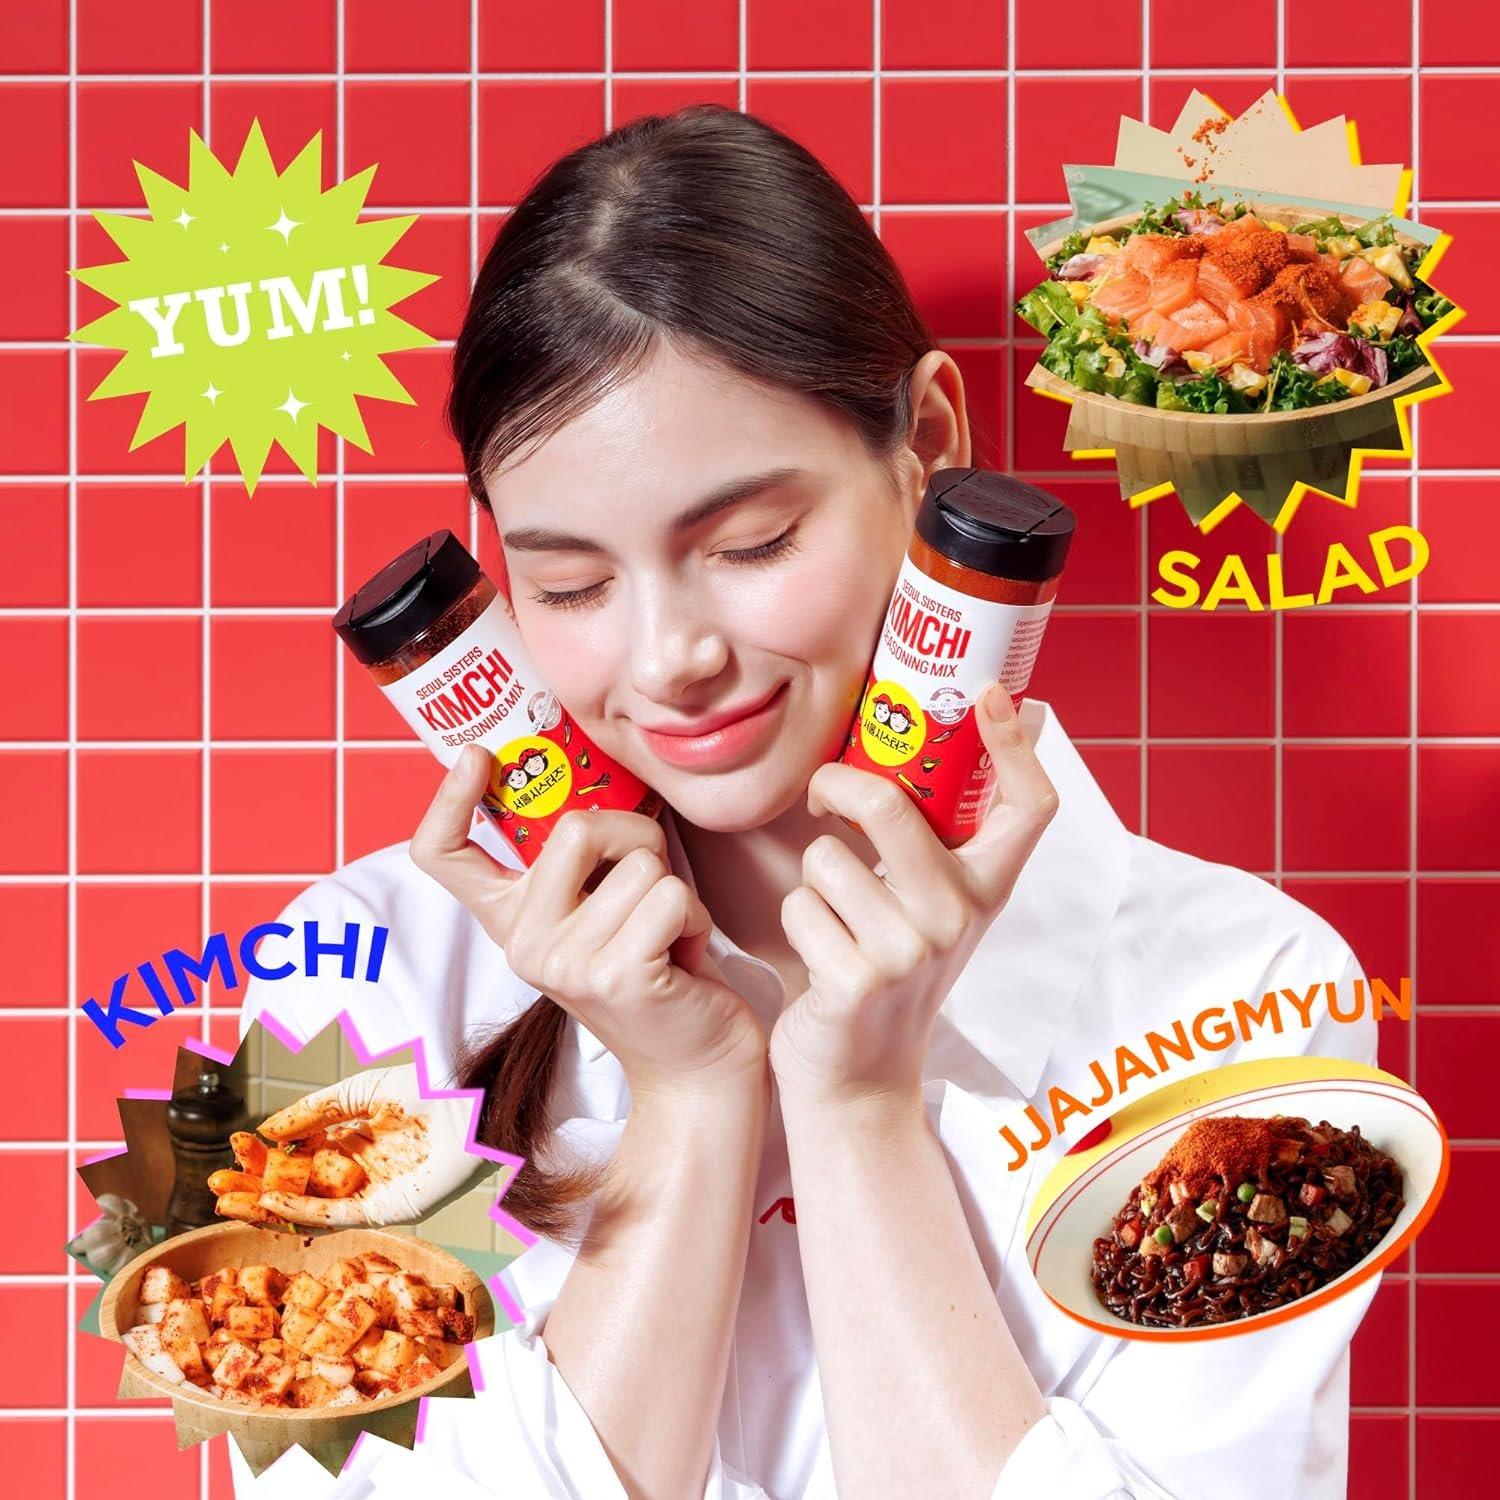 SEOUL SISTERS Korean Kimchi Powder Seasoning Mix 3.5 oz (100g) 1EA - ORIGINAL Spicy Seasoning Mix, Rich in Probiotics, Delicious Barbecue Dry Rub for Chicken Pork Fish Vegetables